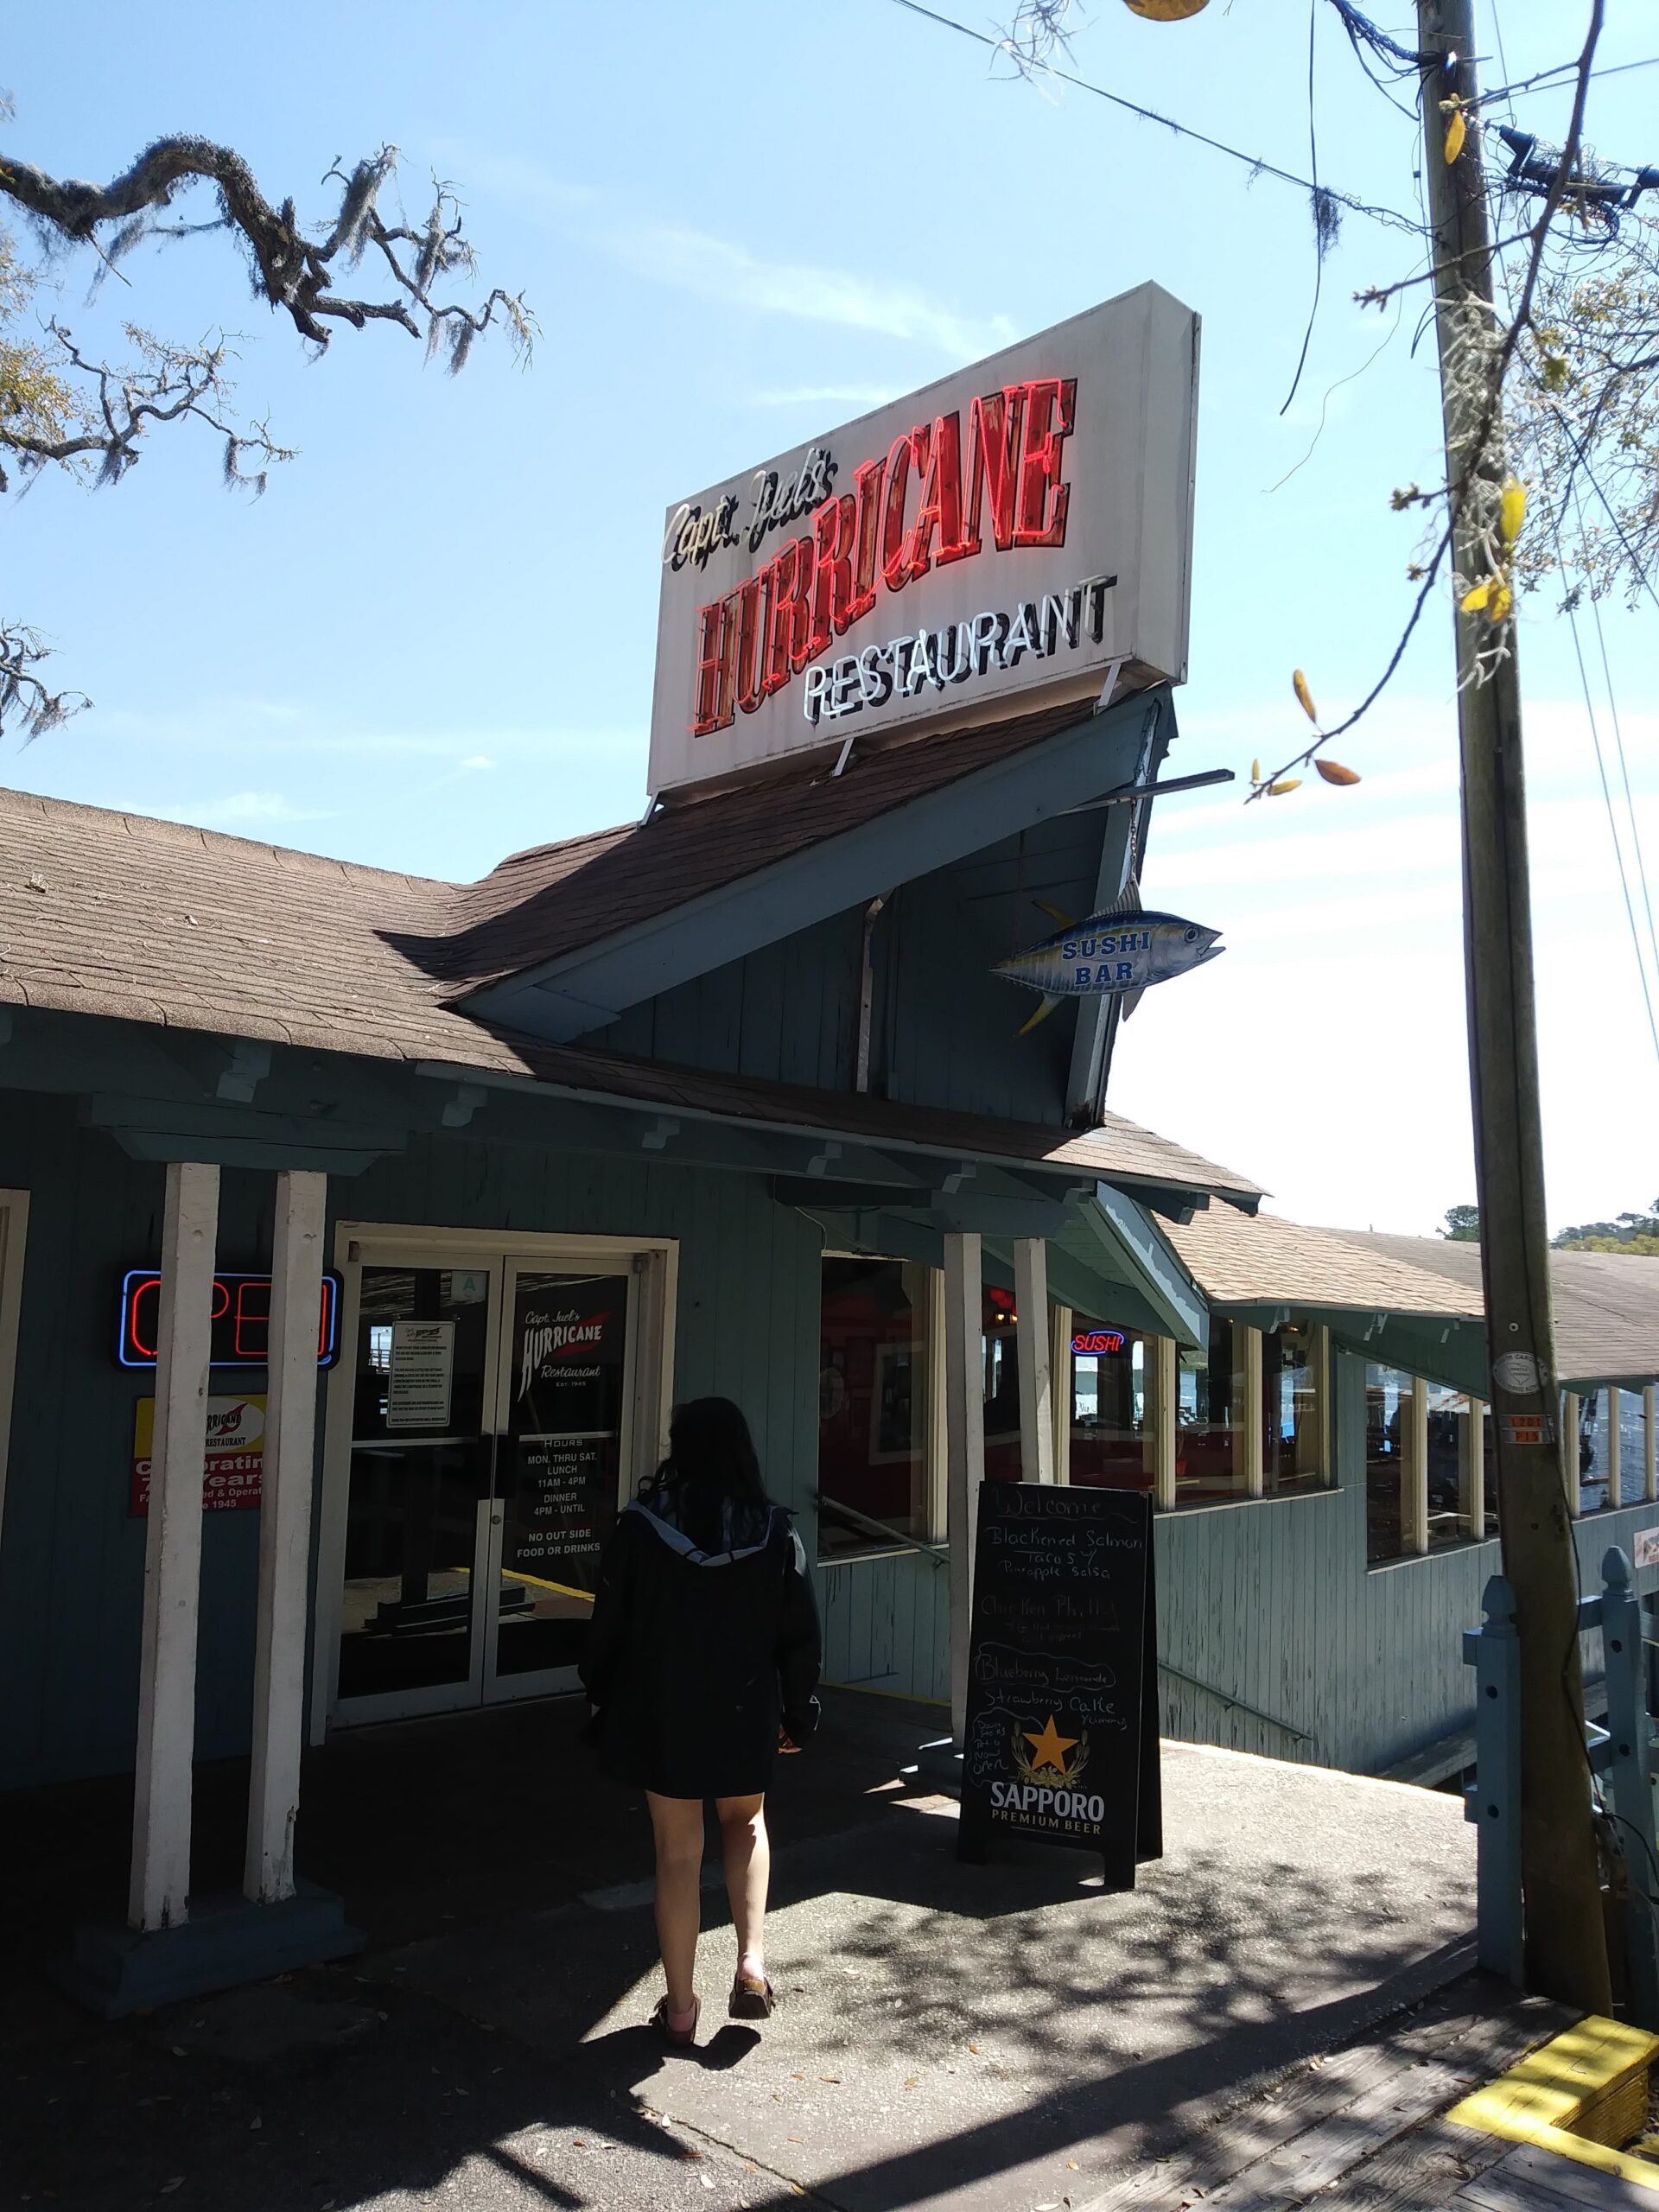 Key West Crazy Waterfront Restaurant & Bar